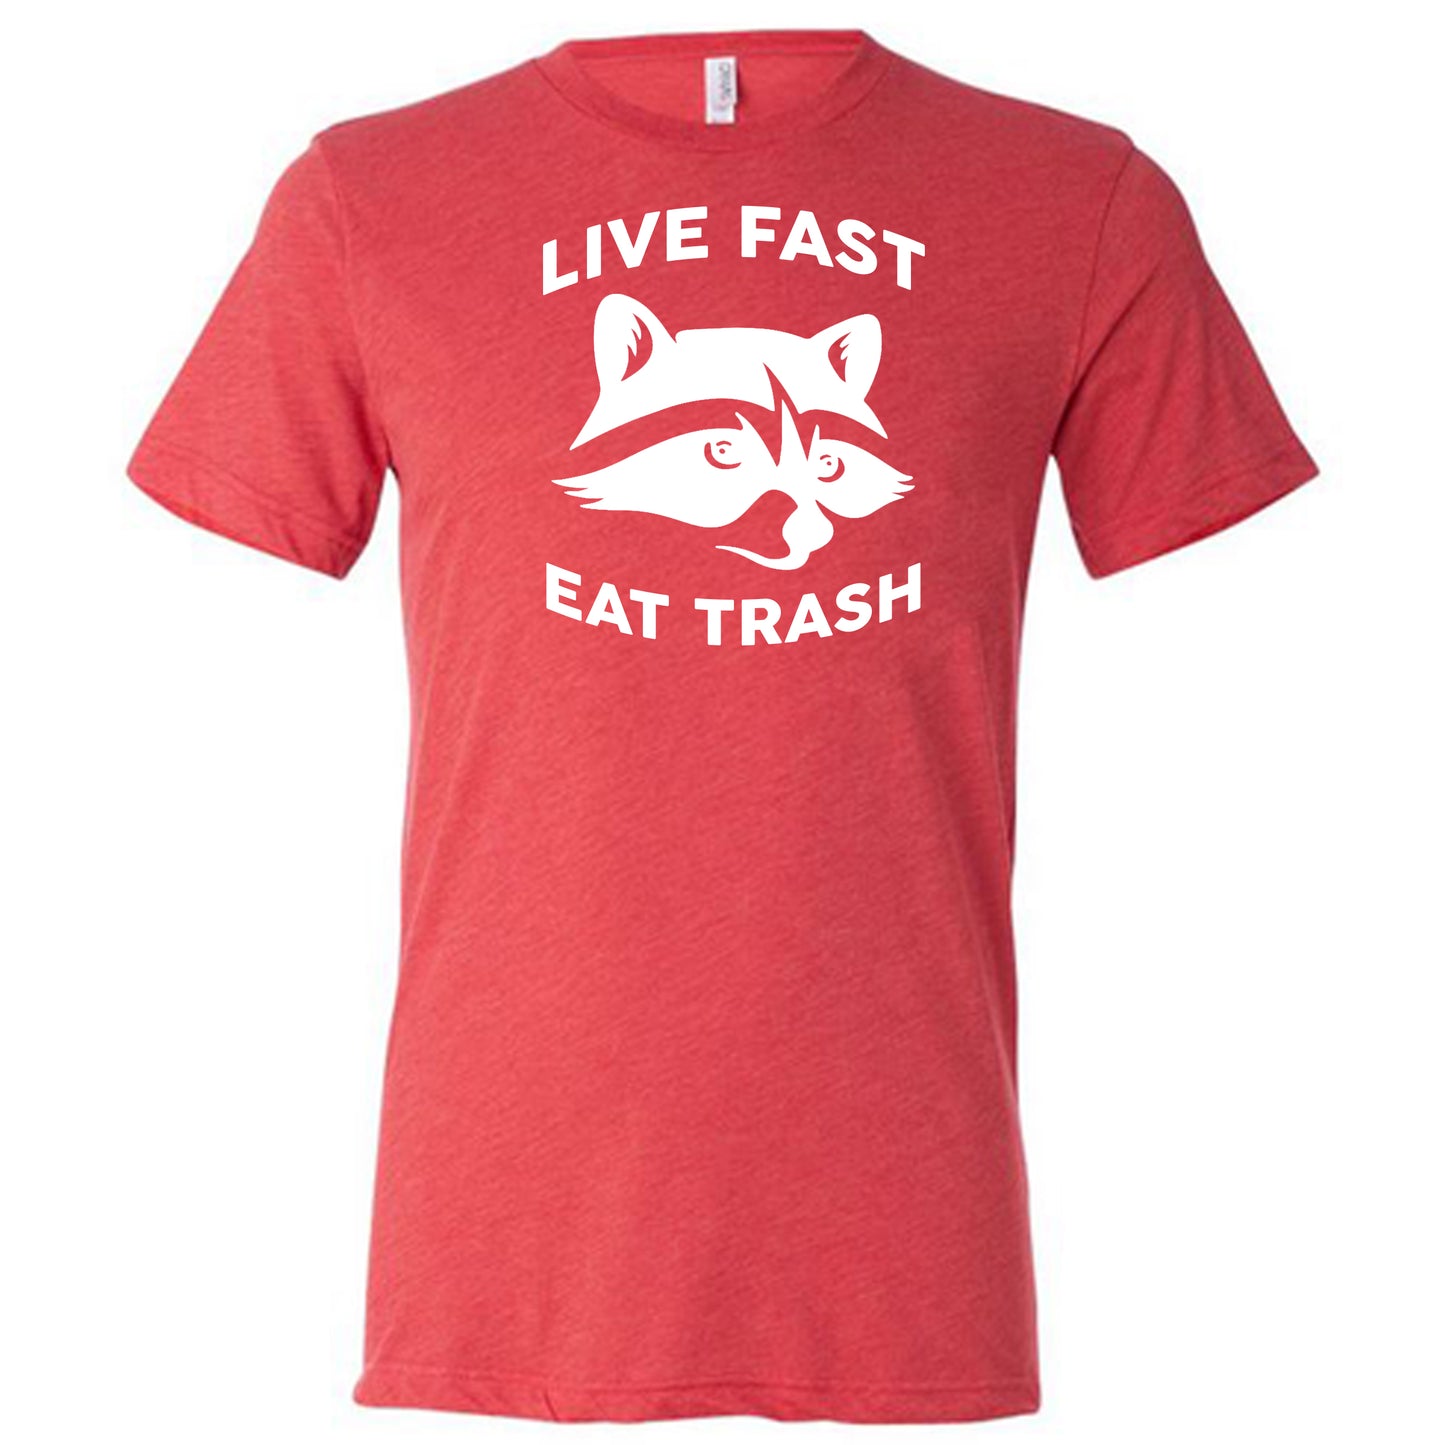 Live Fast Eat Trash Shirt Unisex